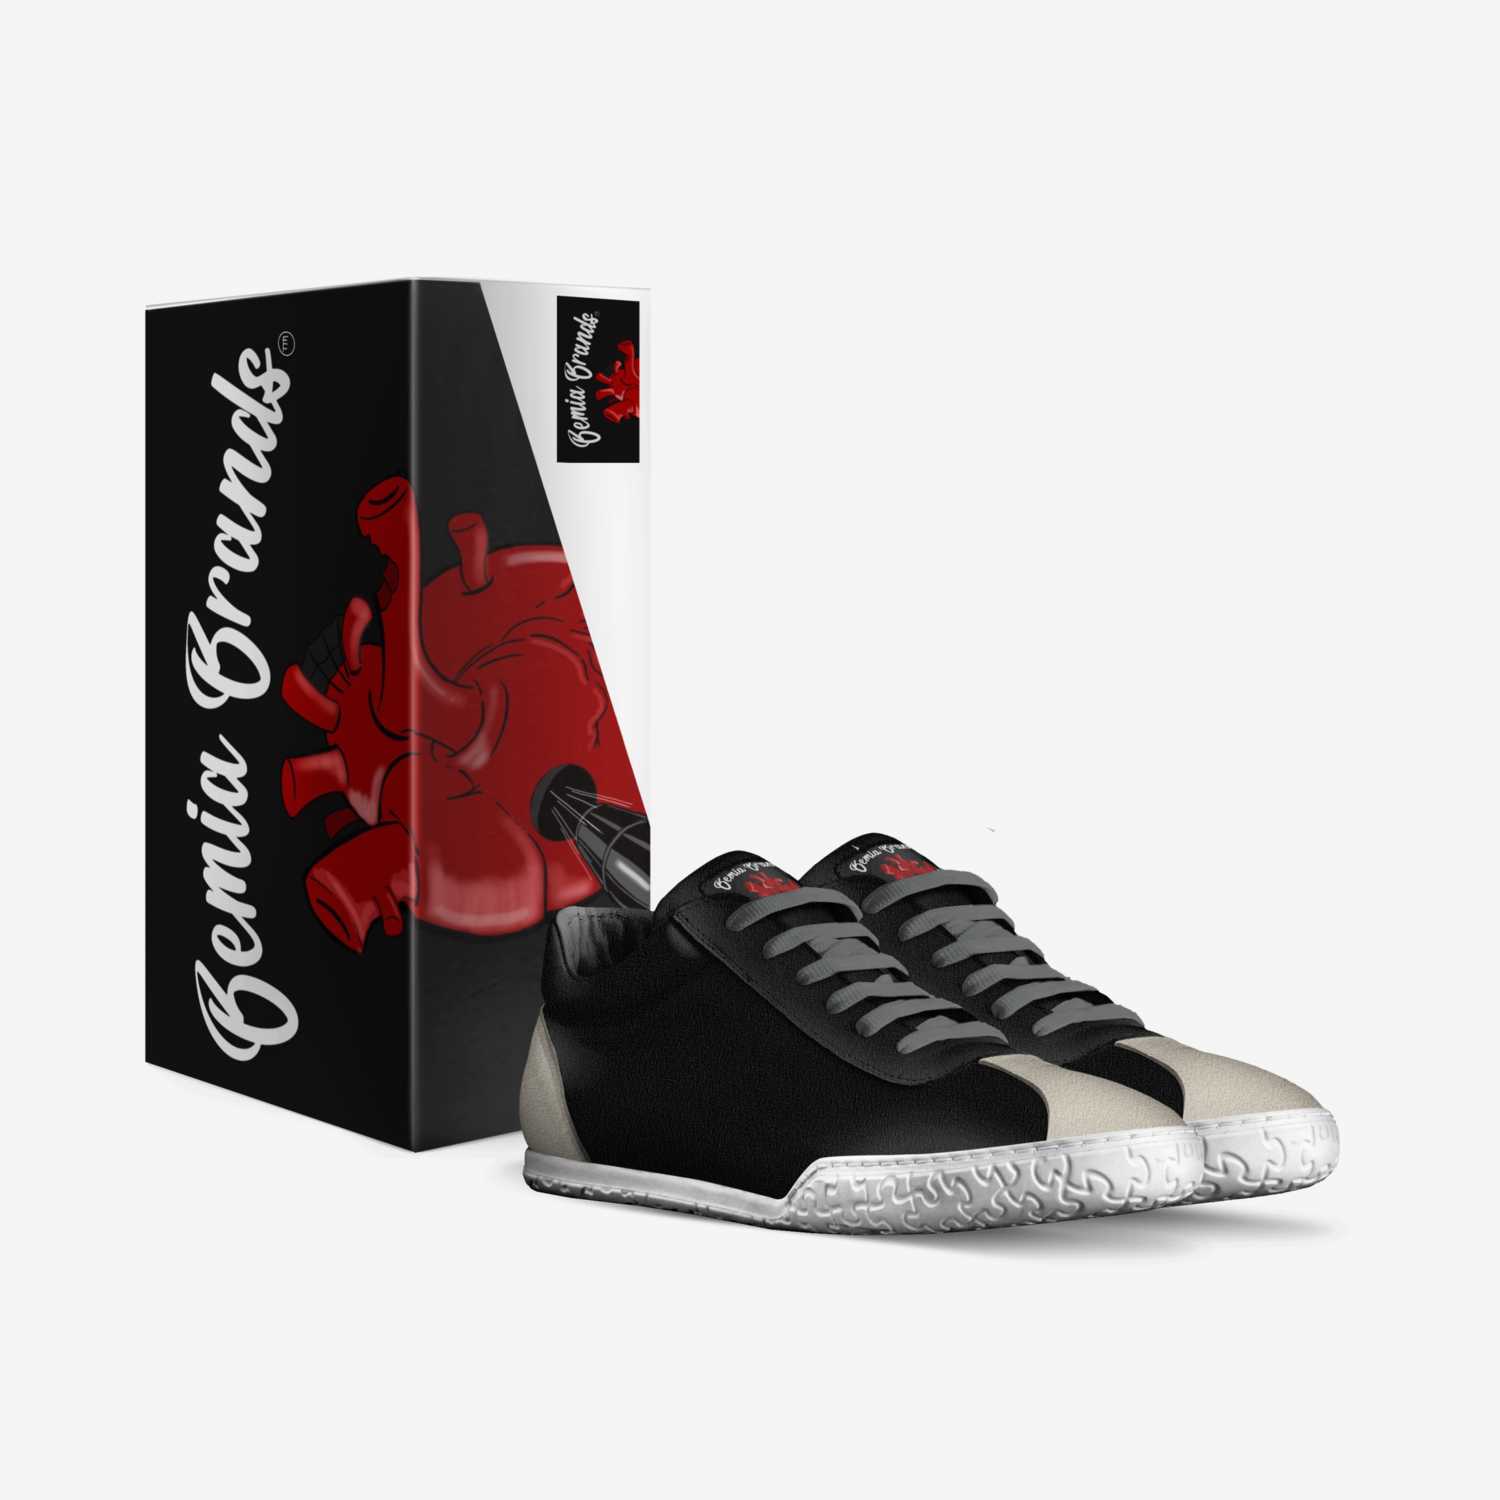 Bemia brand  custom made in Italy shoes by Devon Davis | Box view